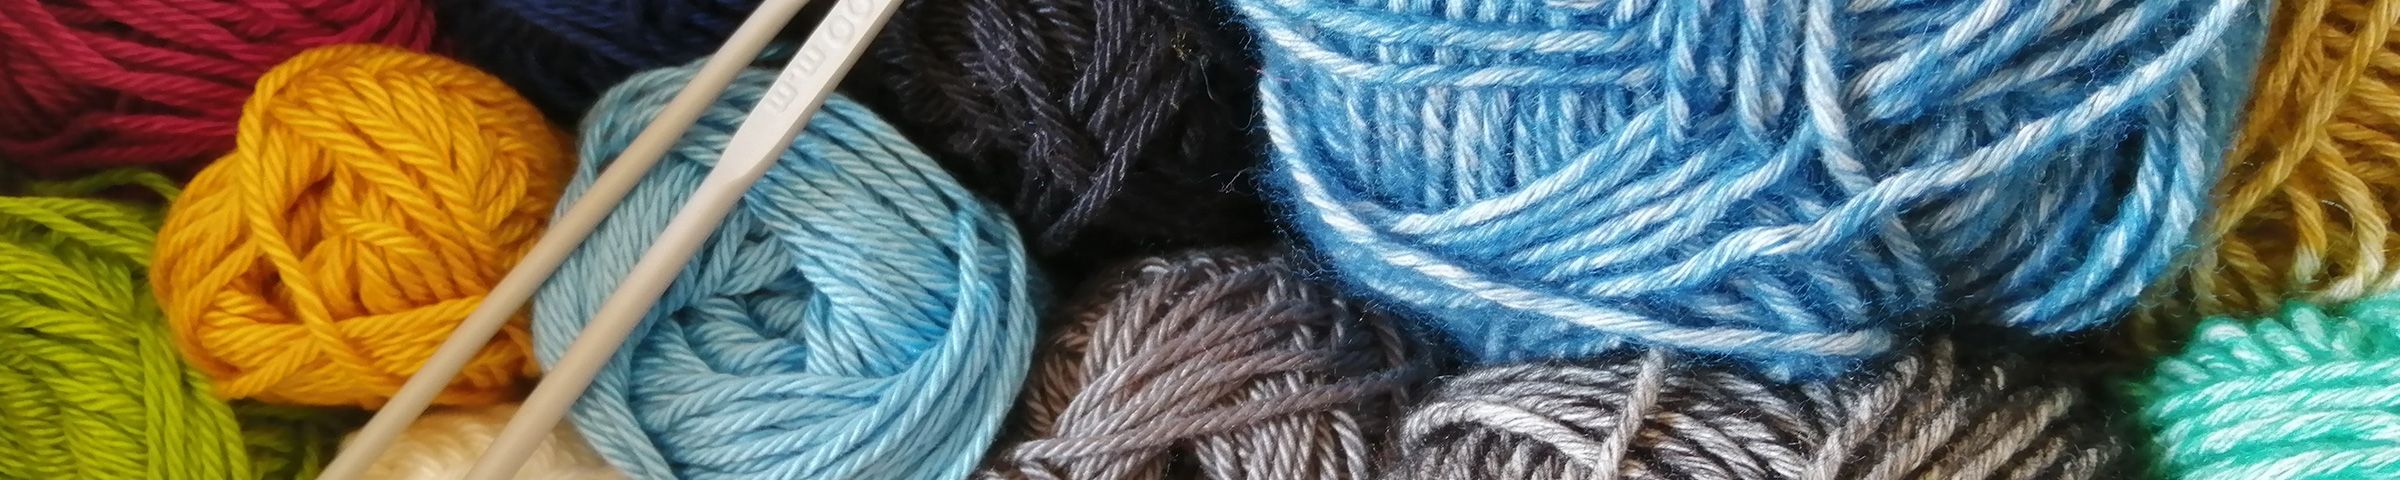 Knitting and Crochet Patterns - Cheryl Moreo